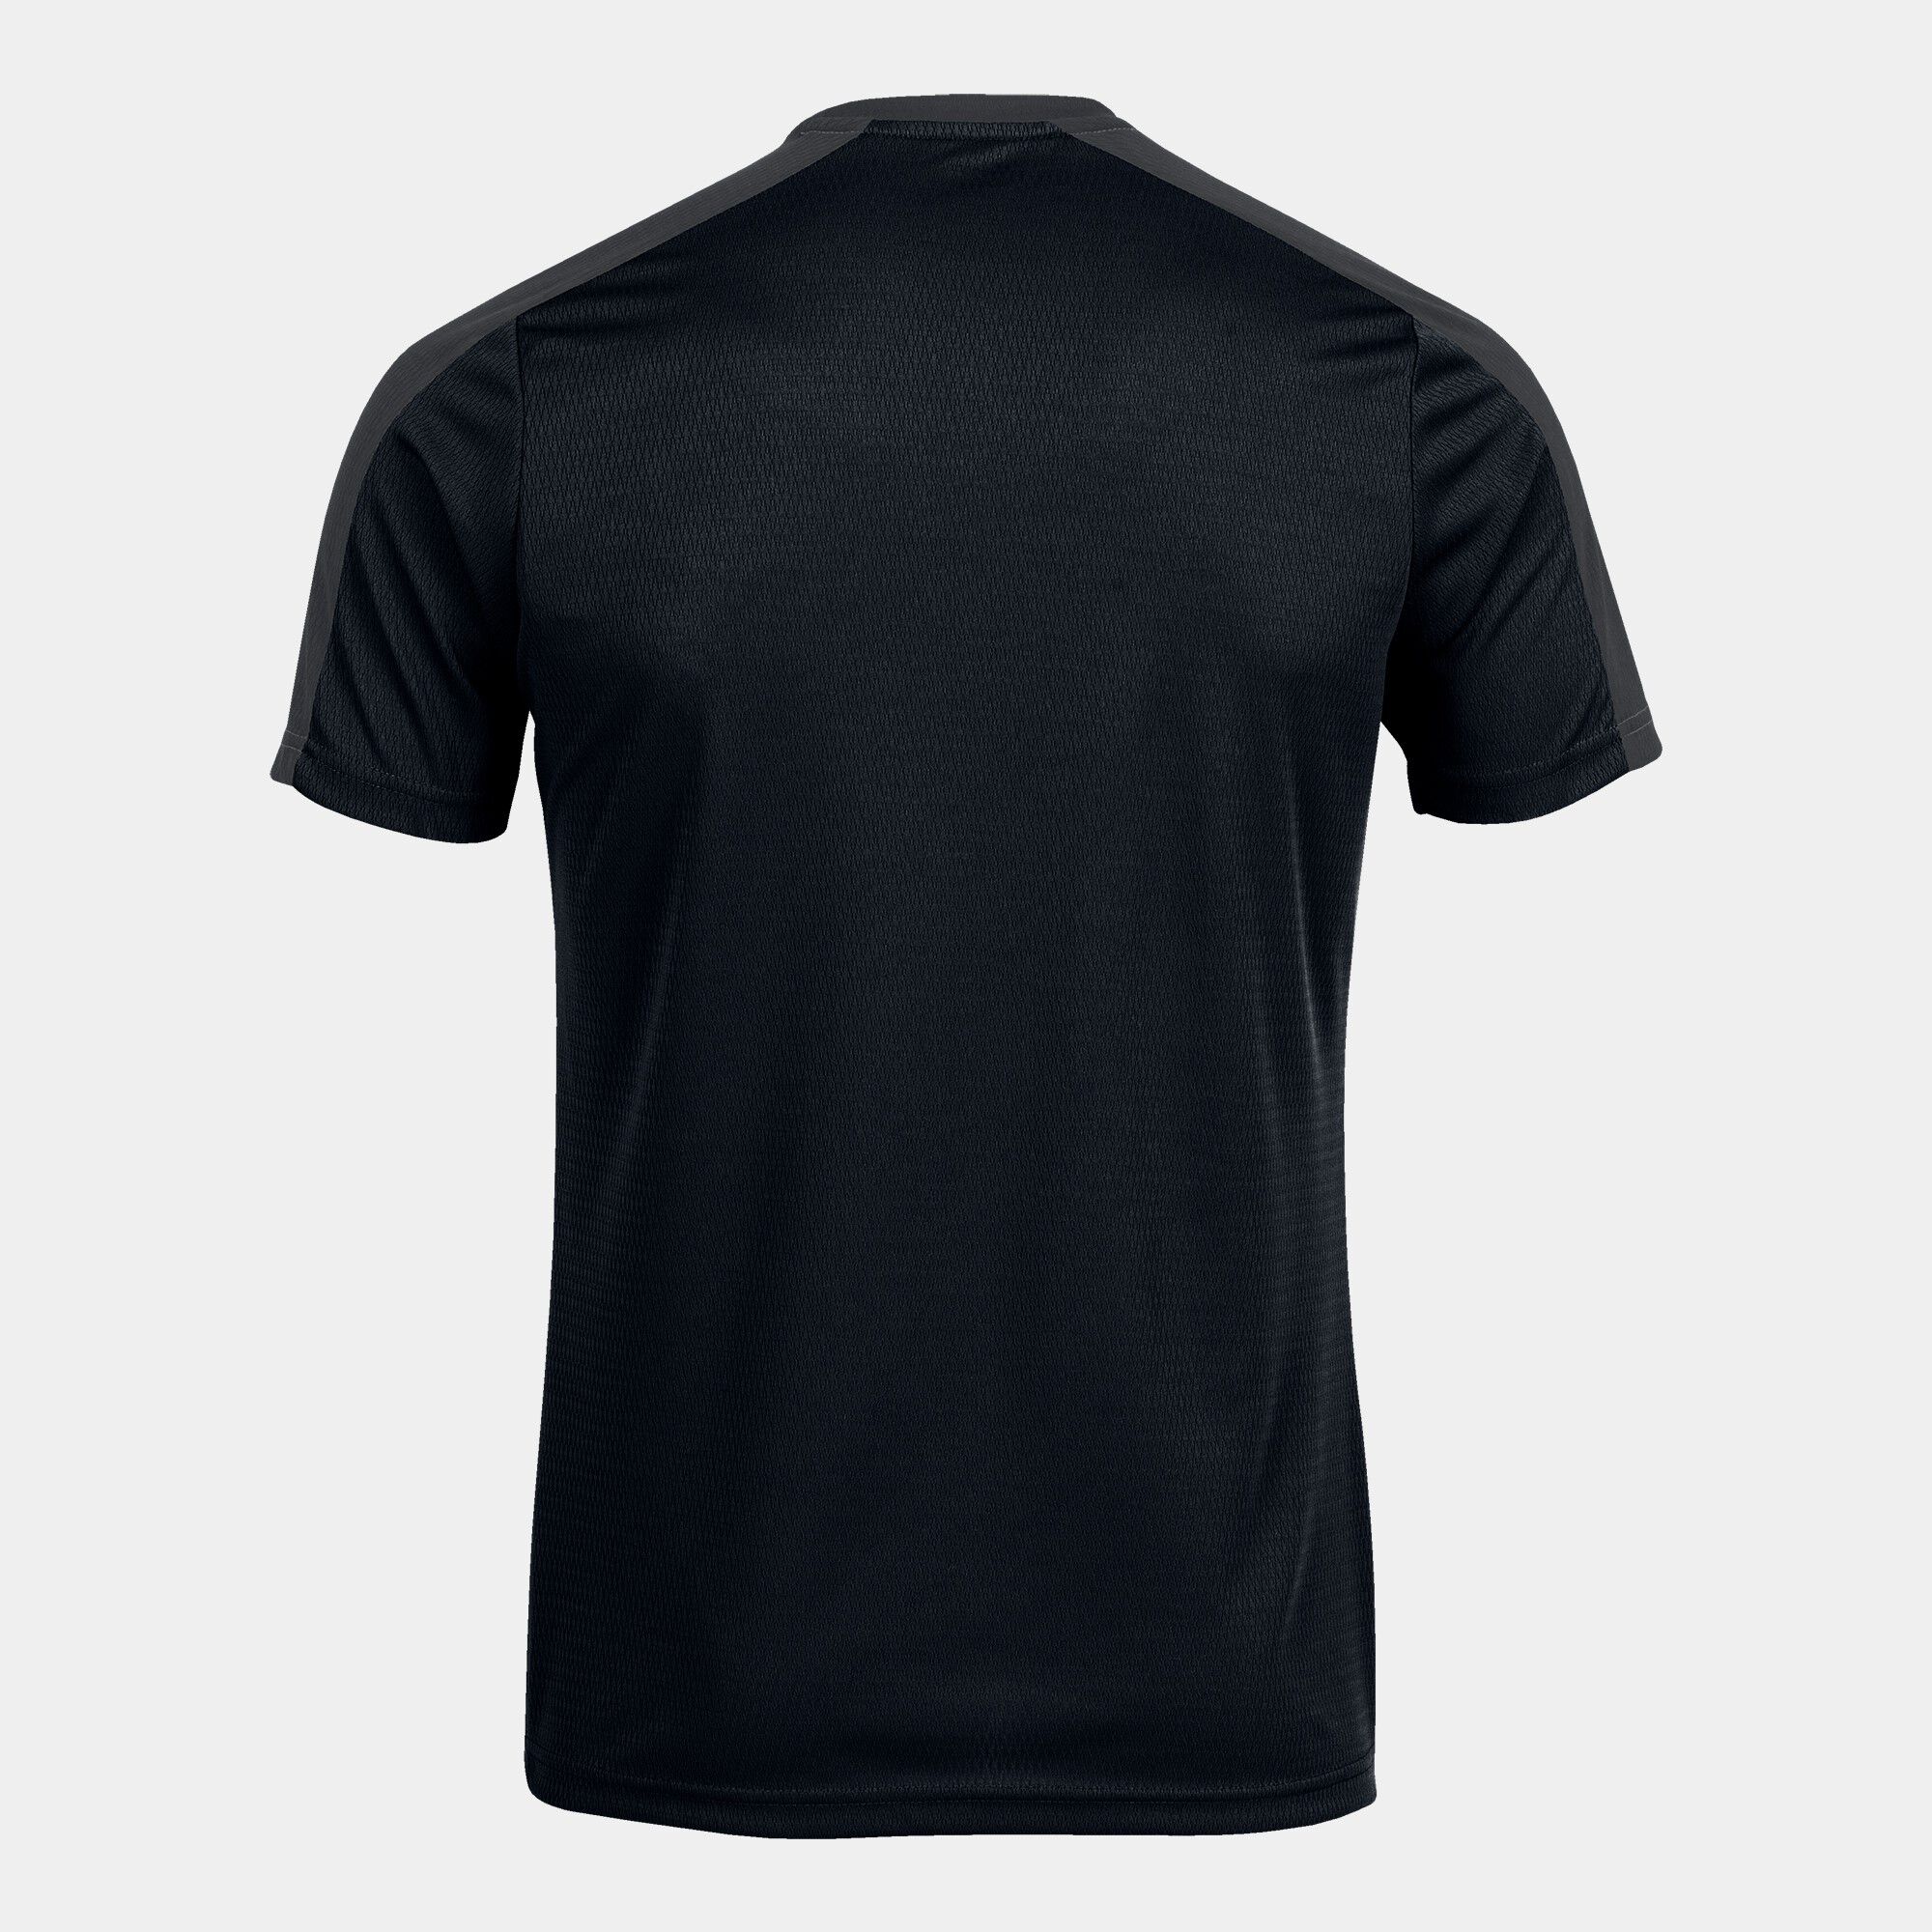 Camiseta manga corta hombre Eco Championship negro antracita